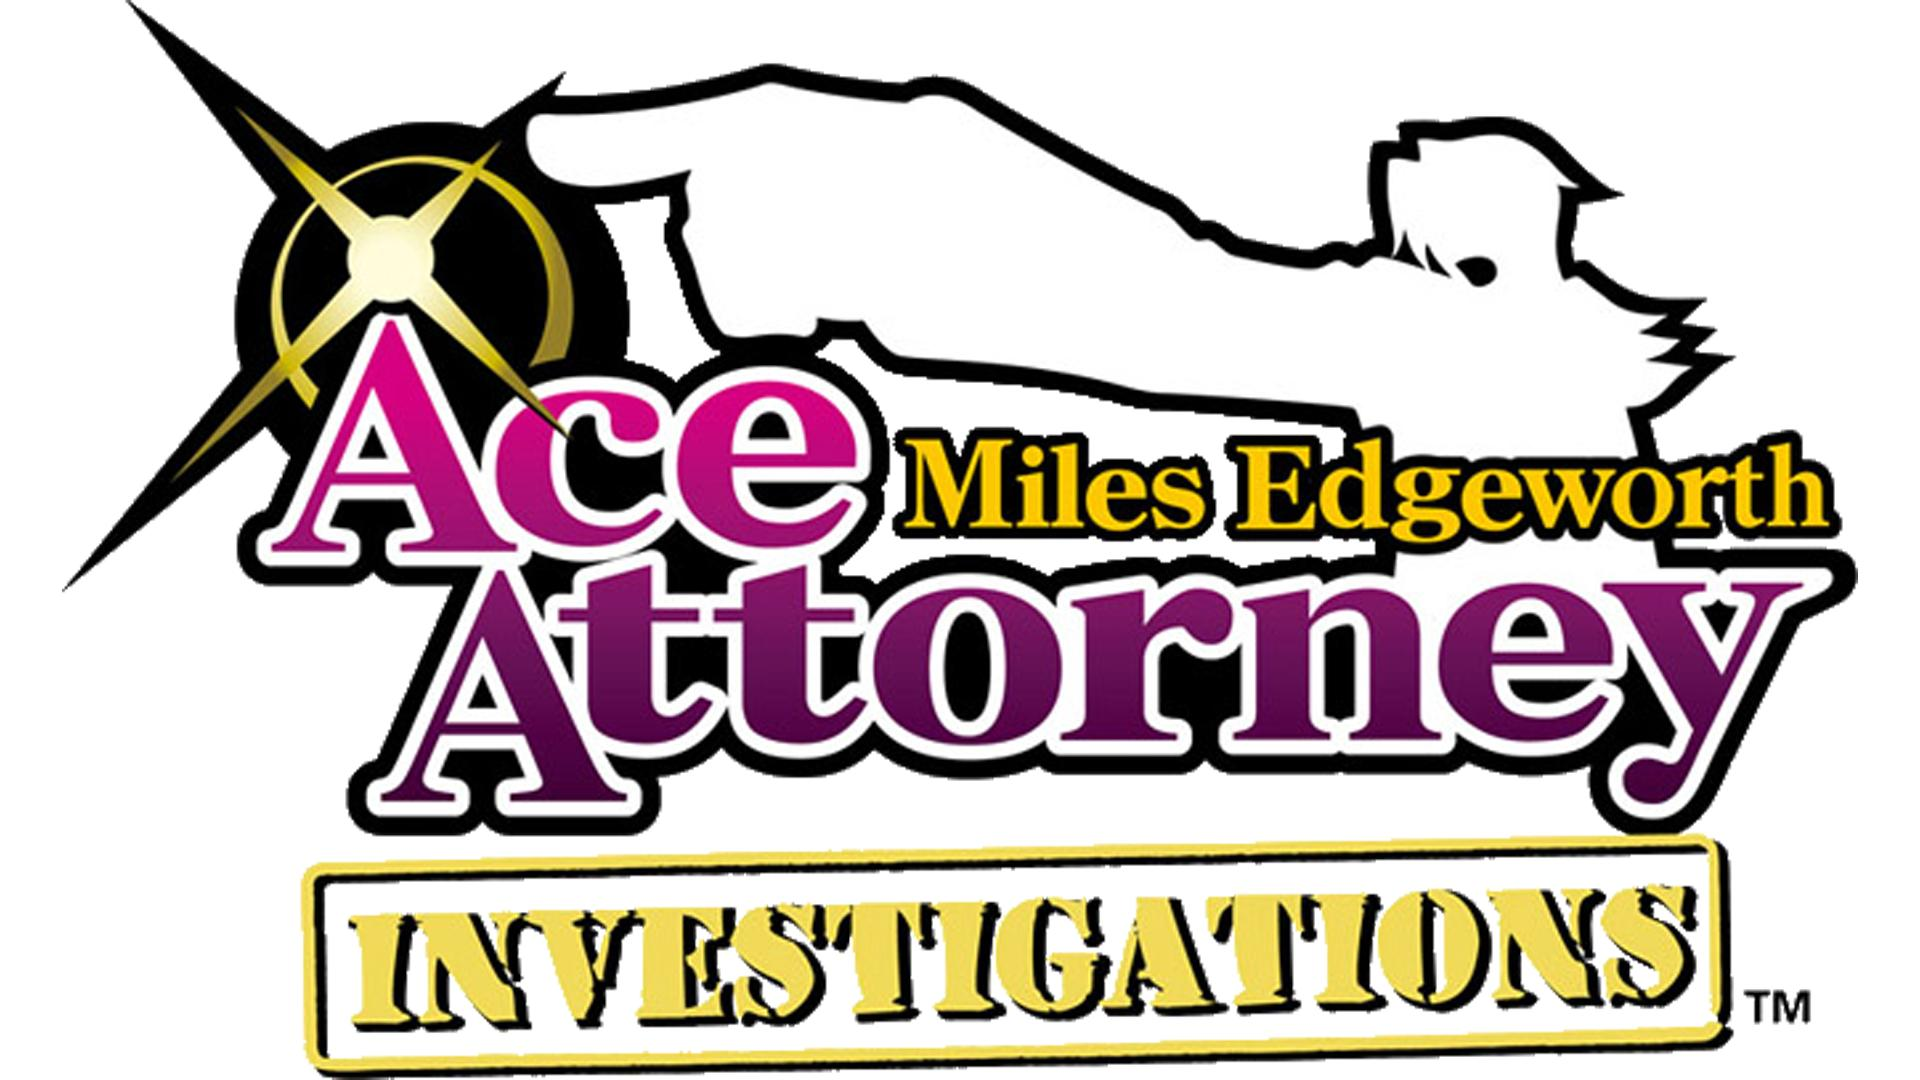 Ace Attorney Investigations: Miles Edgeworth Logo